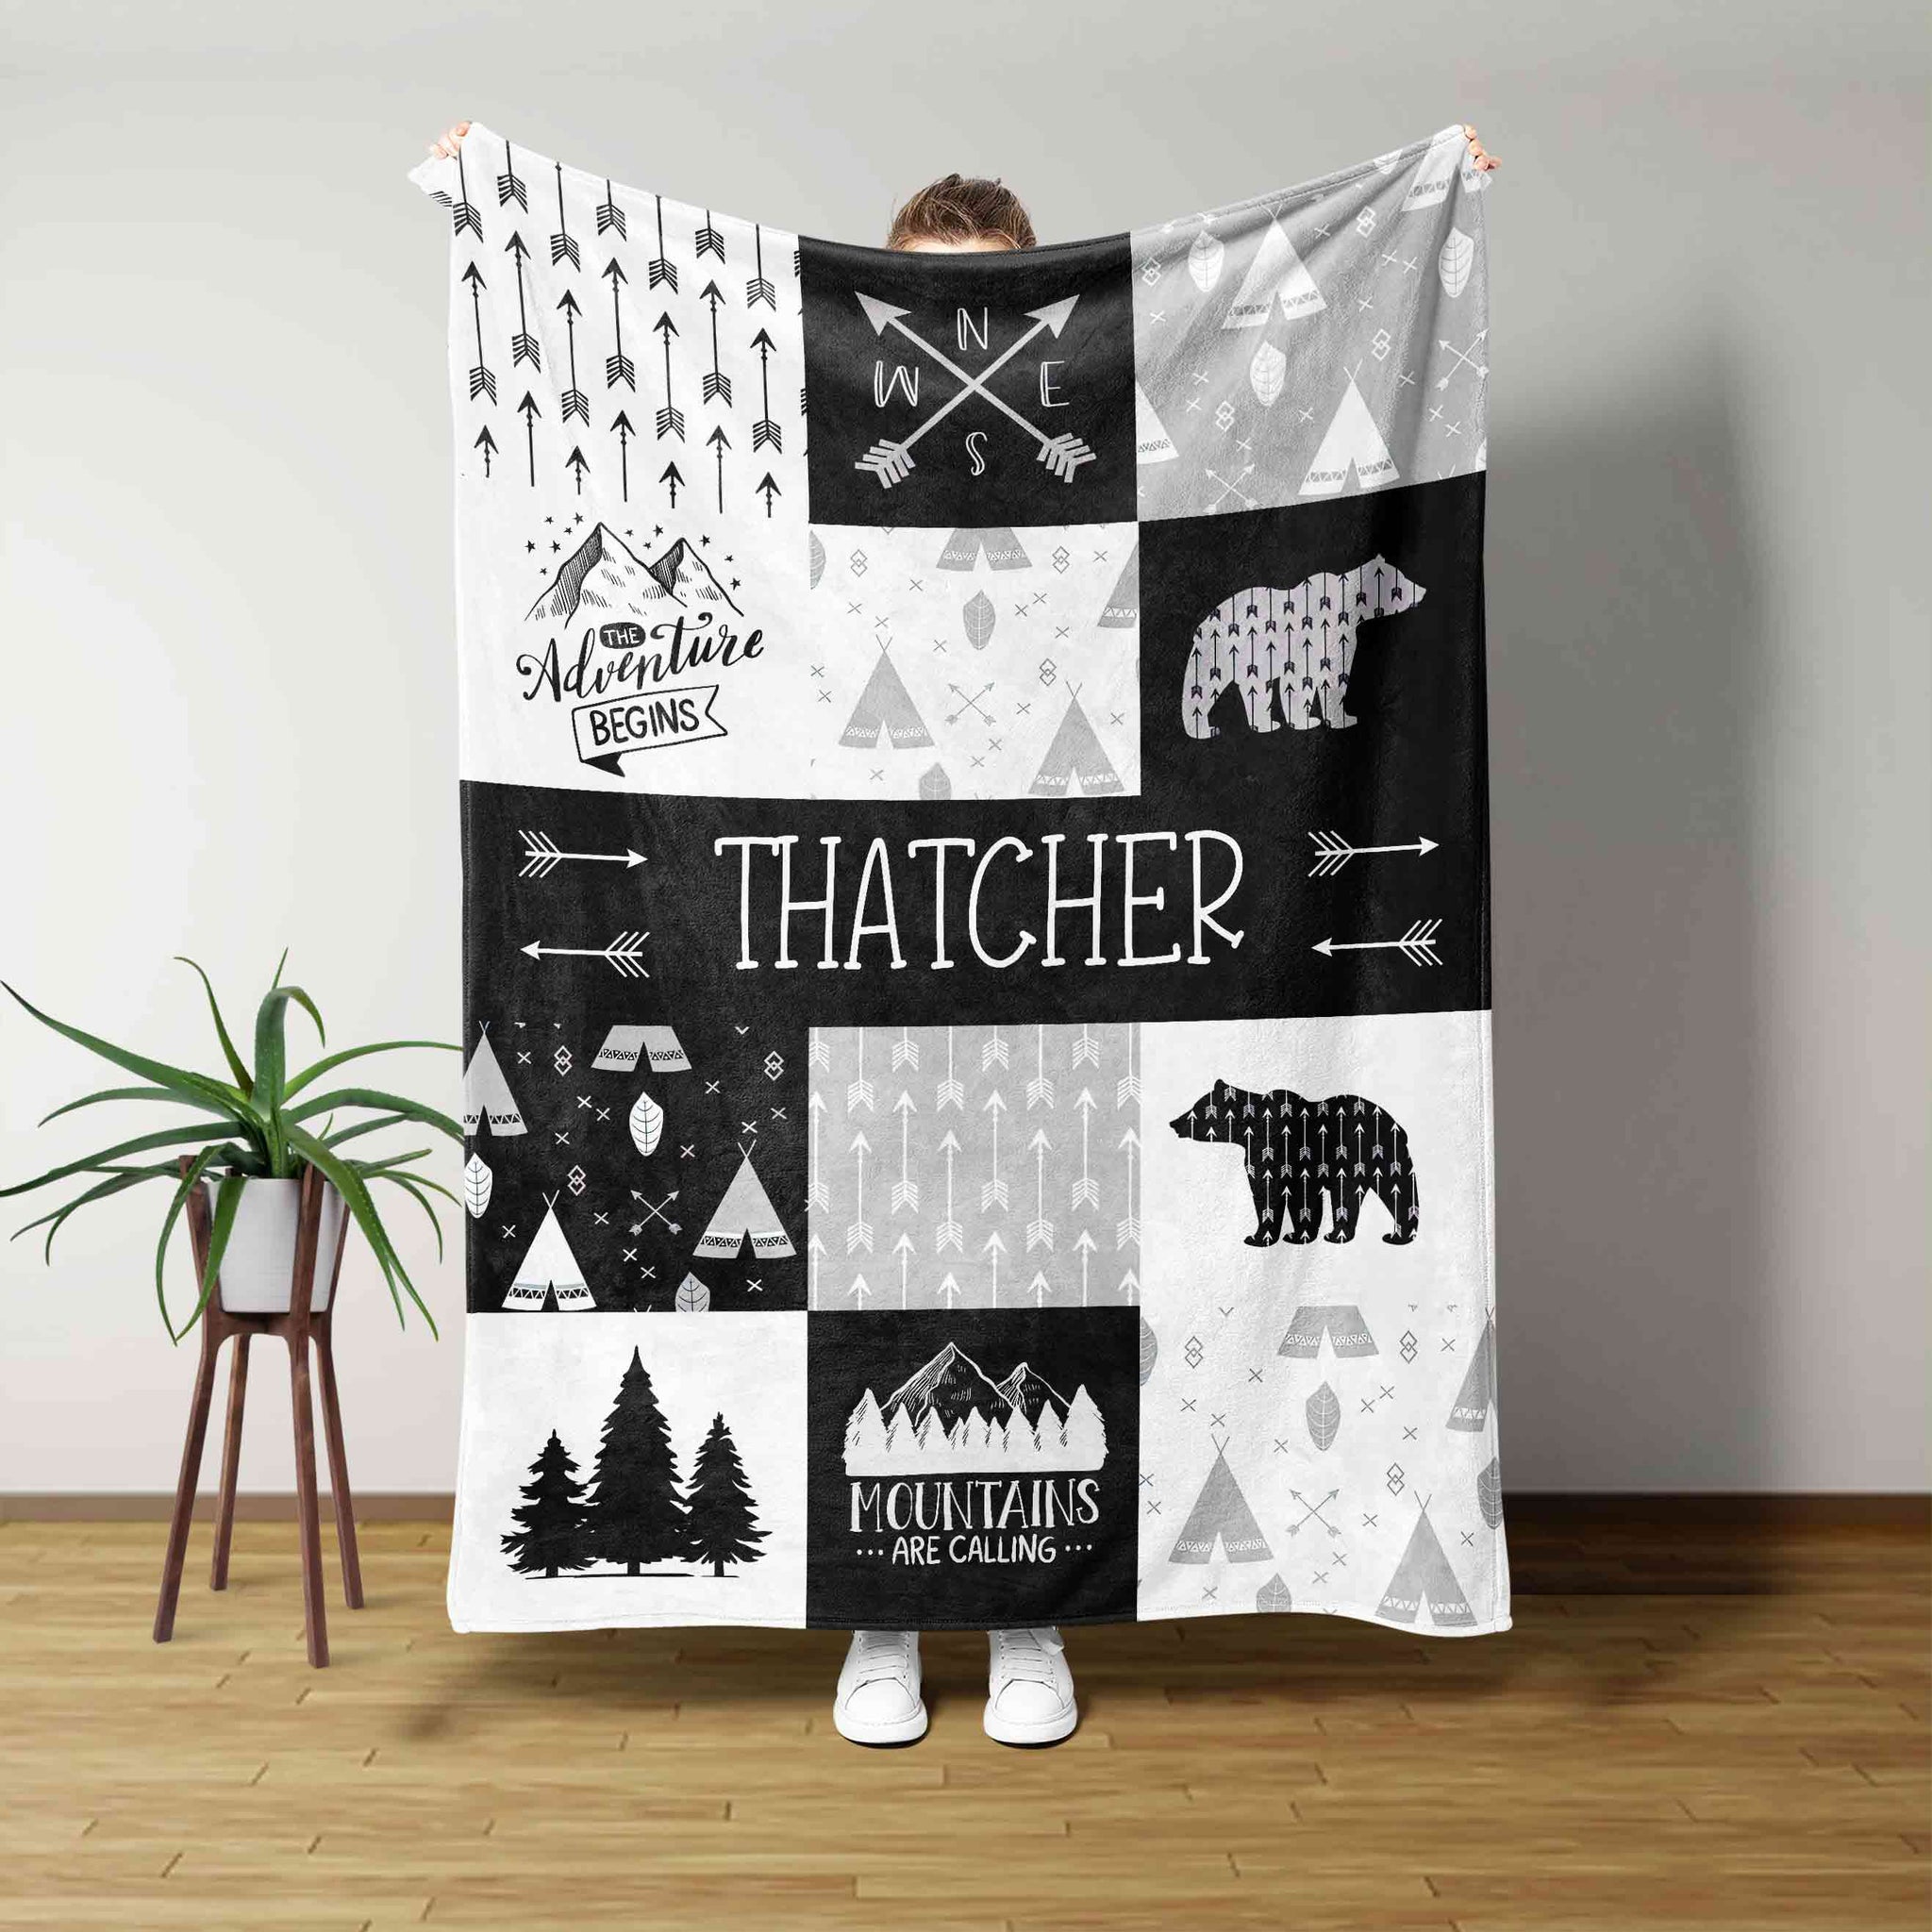 Personalized Name Blanket, Bear Blanket, Arrow Blanket, Winter Blanket, Family Blanket, Gift Blanket